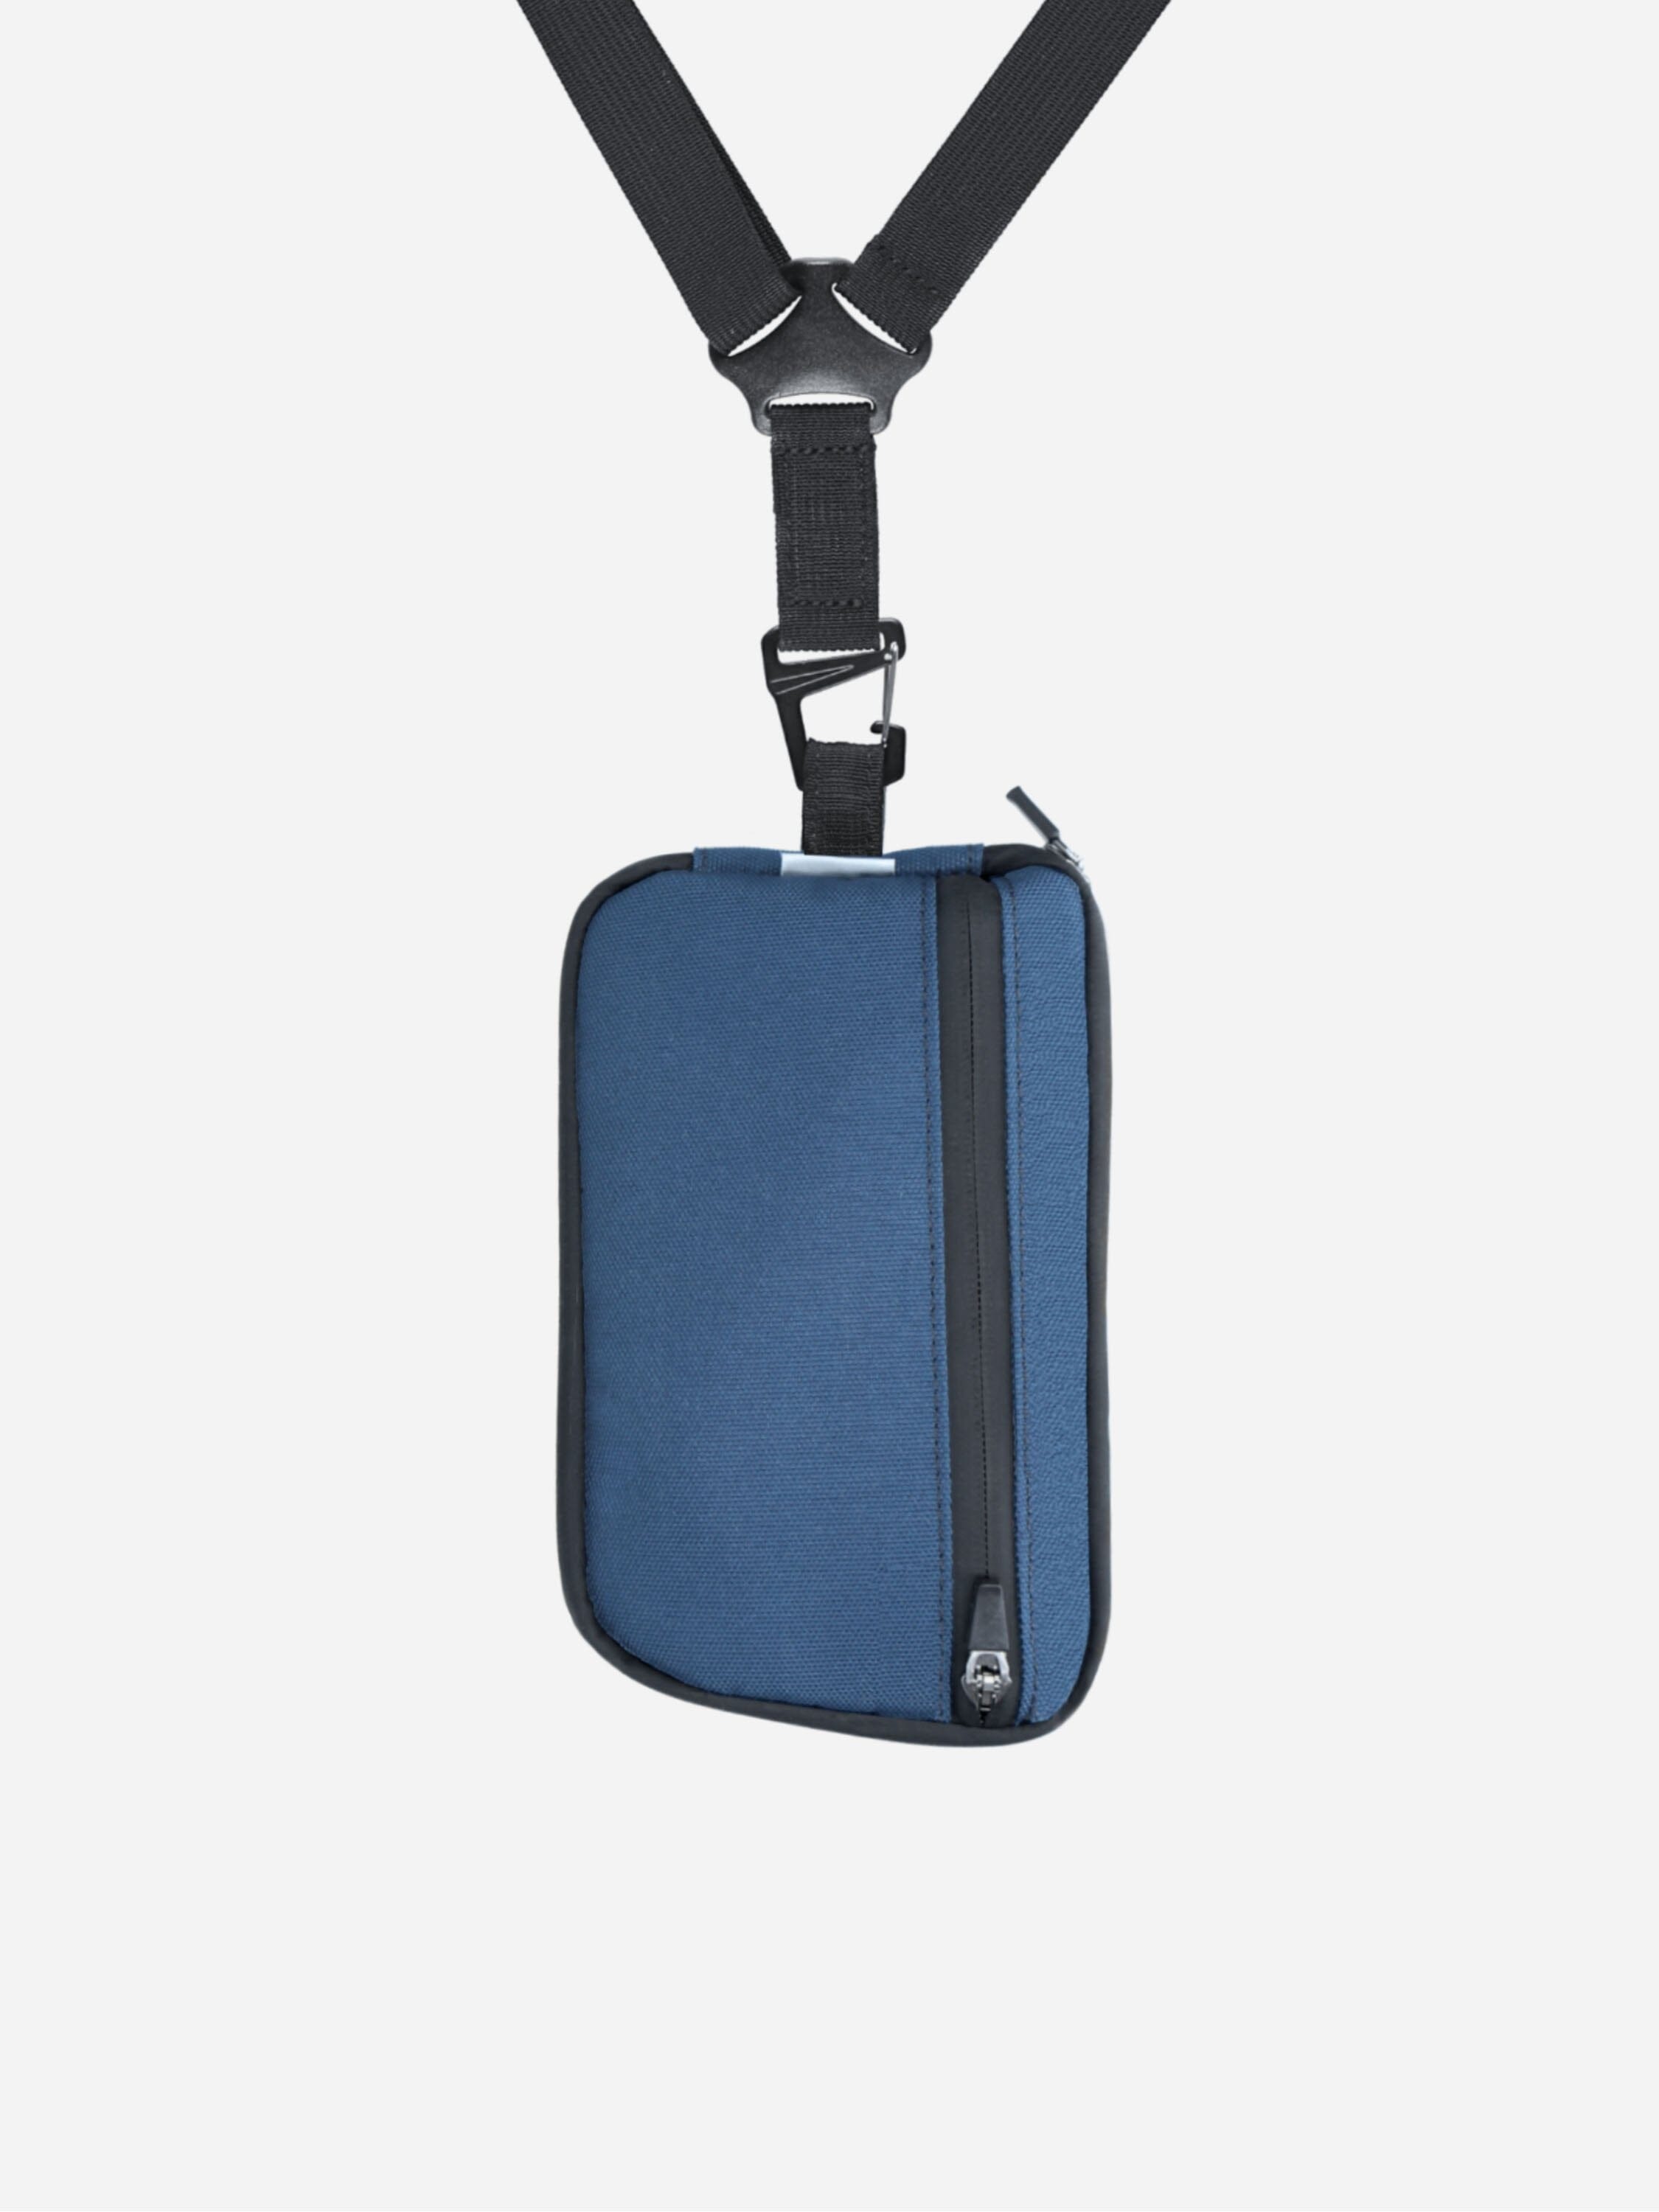 AUX™ Pocket - Lunar Blue Cordura Bag bolstr Navy  